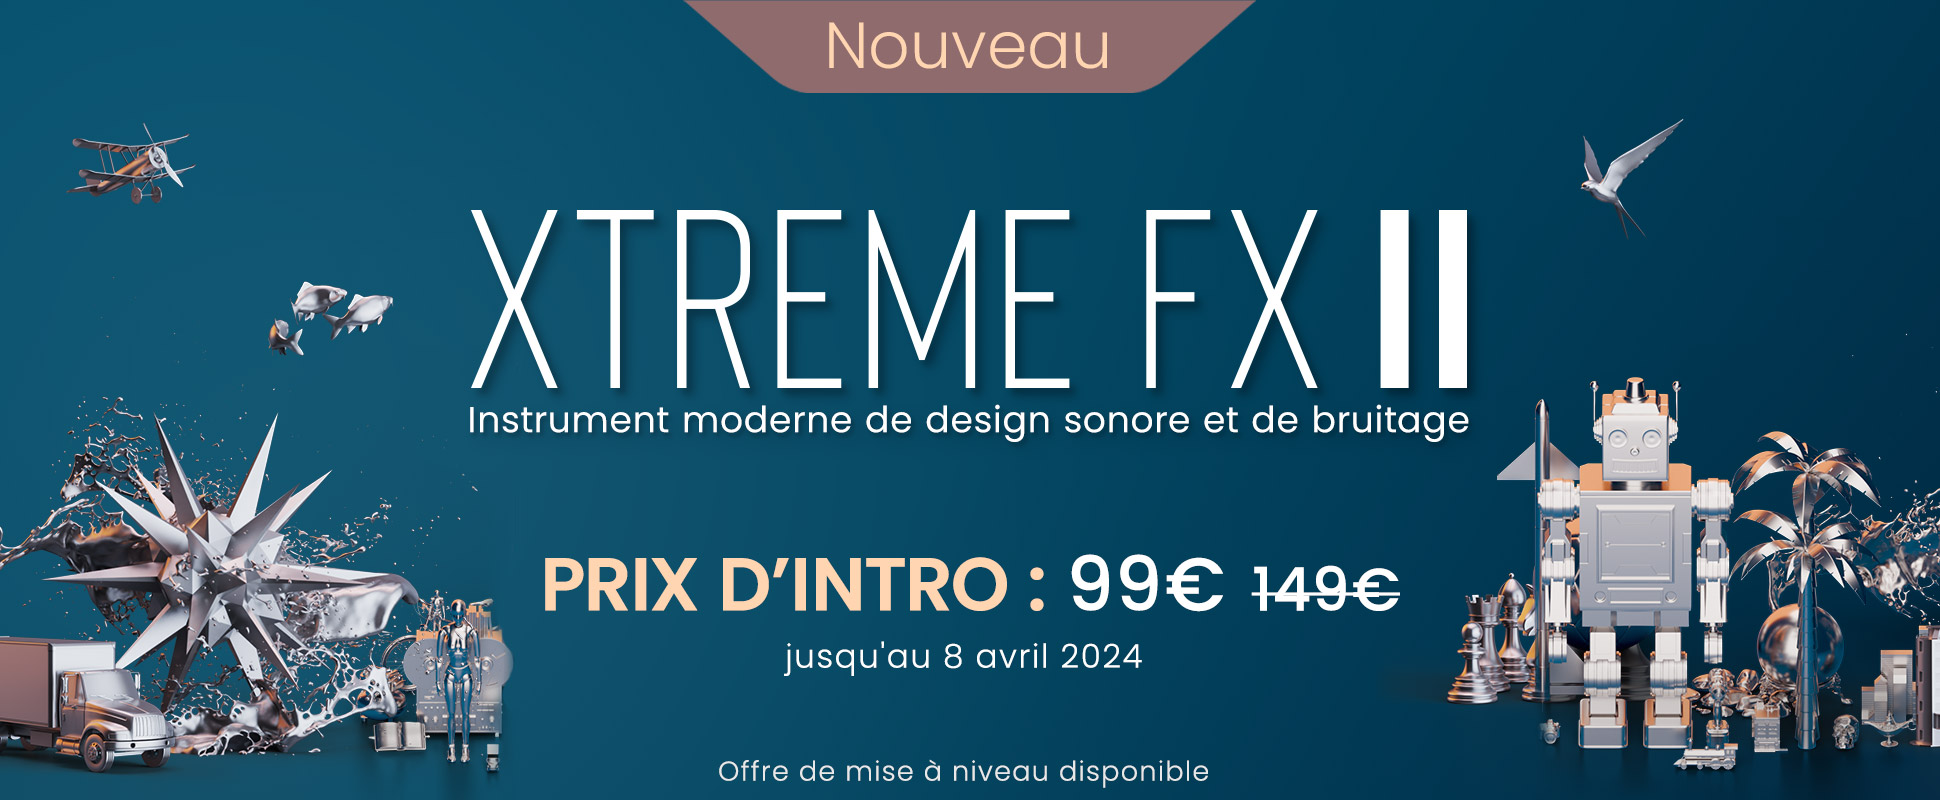 Xtreme FX 2 - Mars 2024